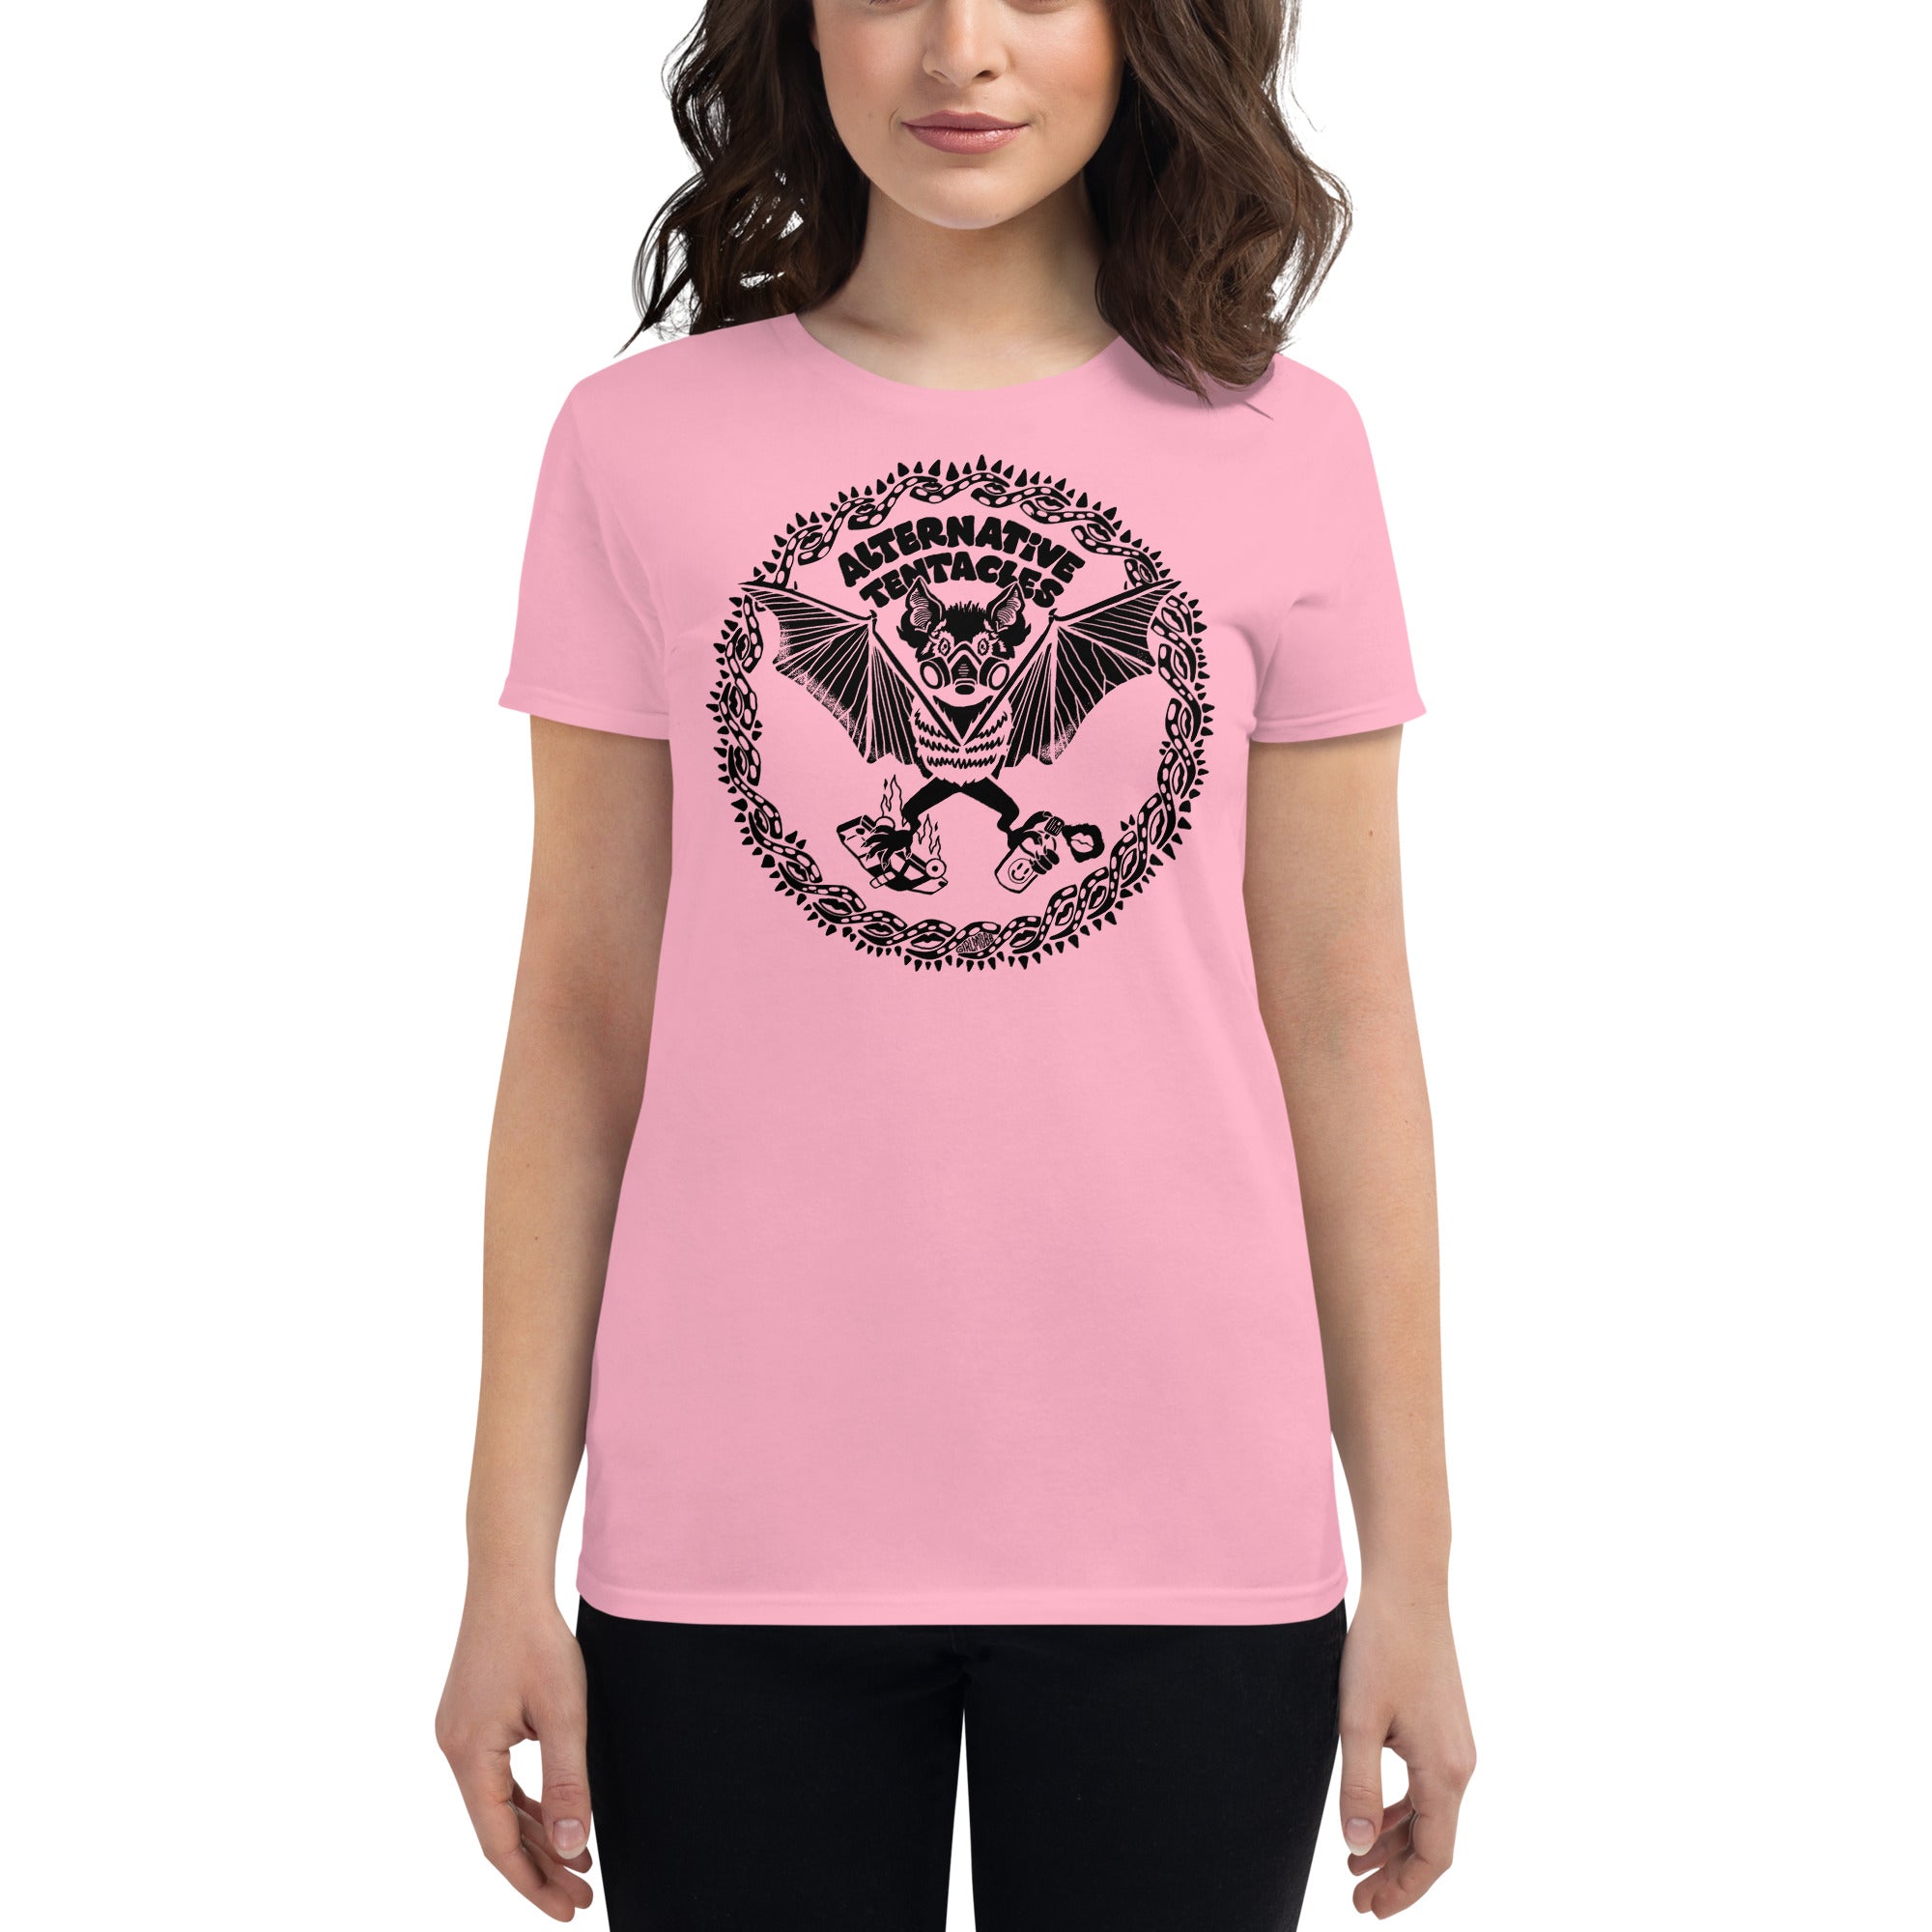 A.T. Bat Logo - "Girl Mobb" Fitted Pink T-shirt